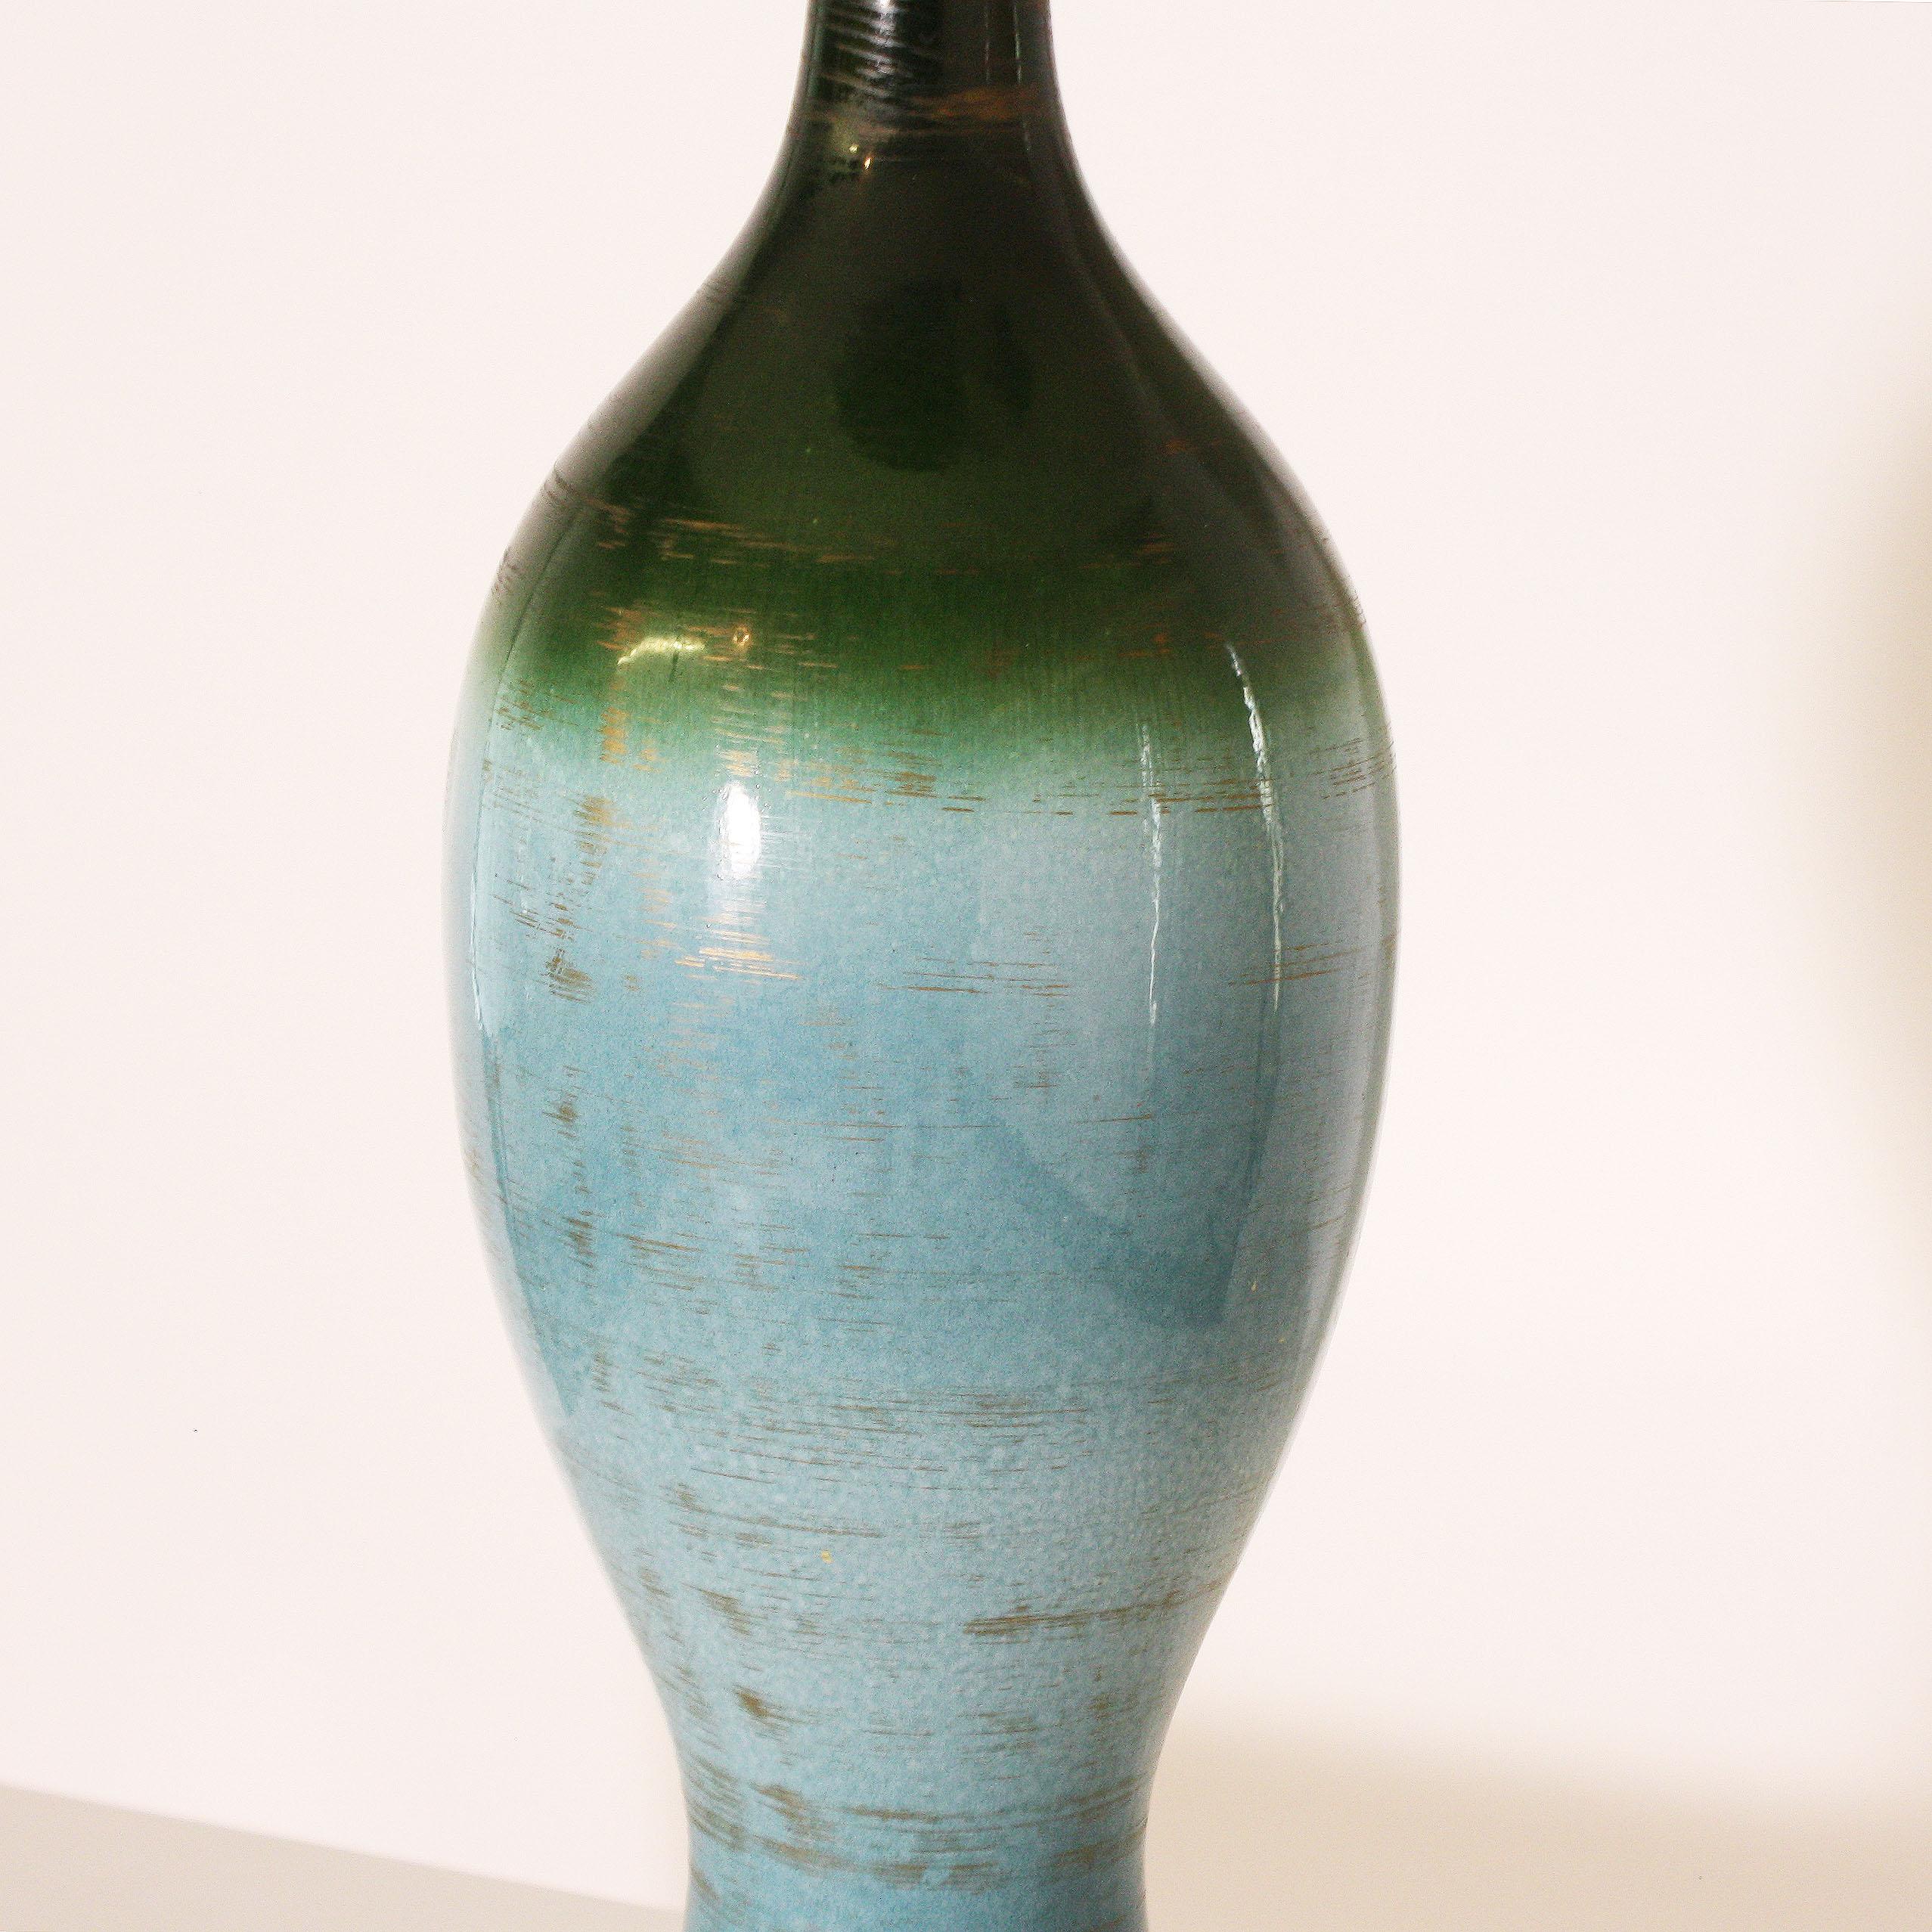 Ombre glaze urn lamp, circa 1960
$2500